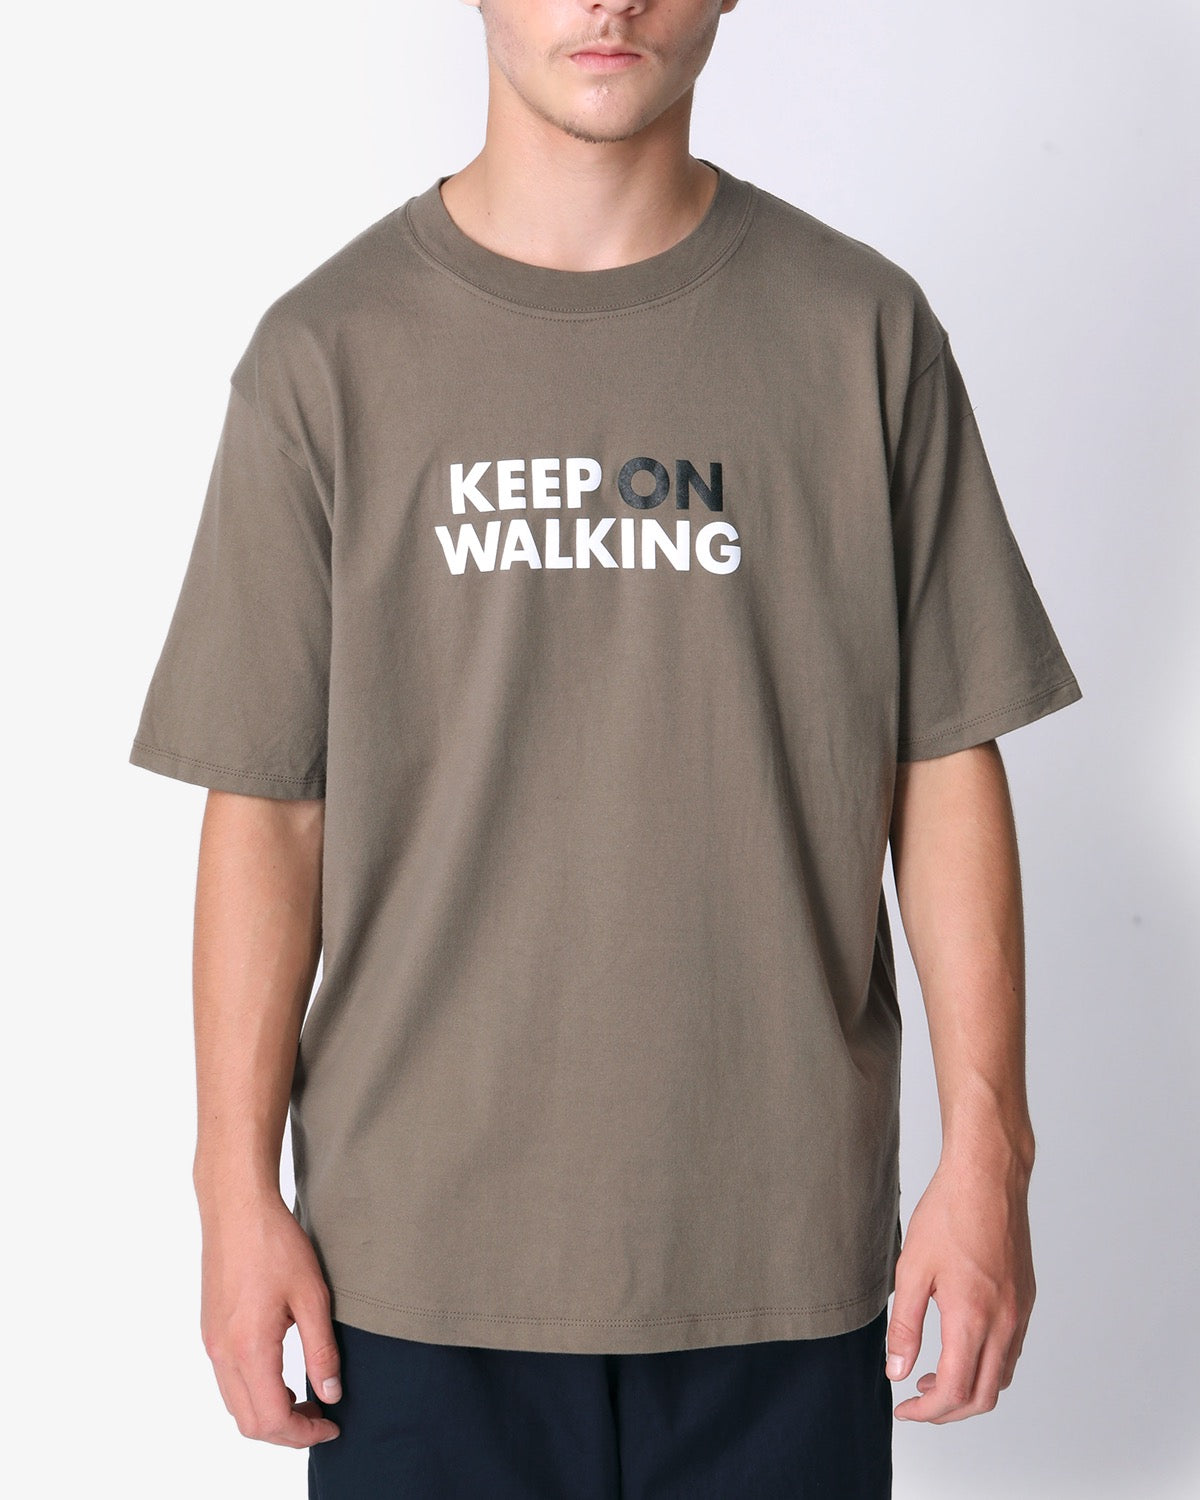 DWELLER S/S TEE "KEEP ON WALKING"